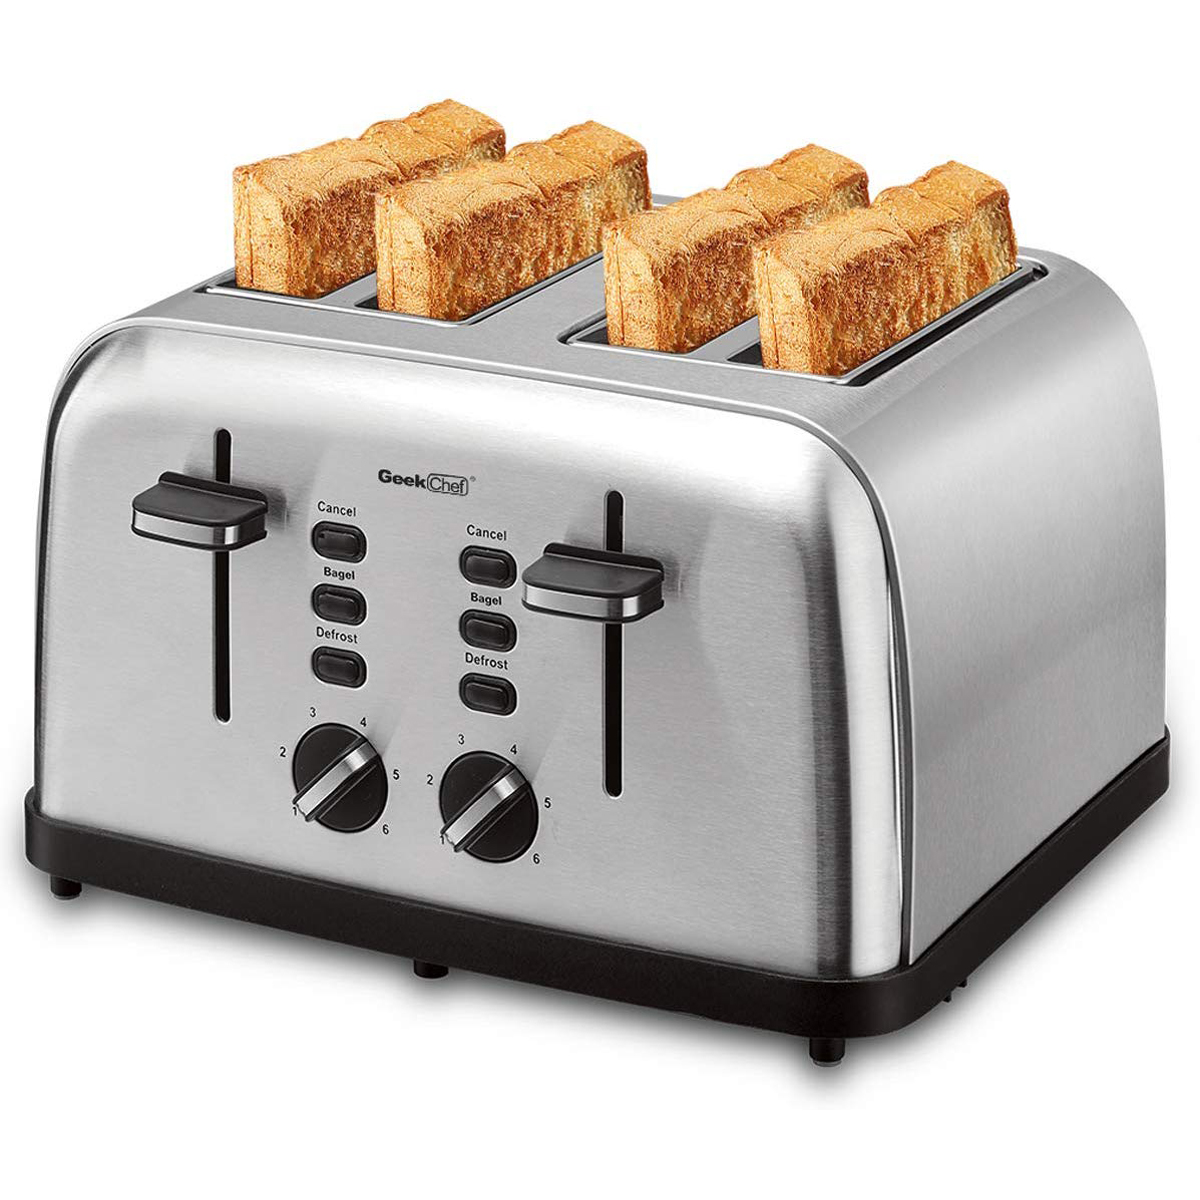 Kenmore 2-slice Toaster Wide Slot Bagel/defrost - Stainless Steel